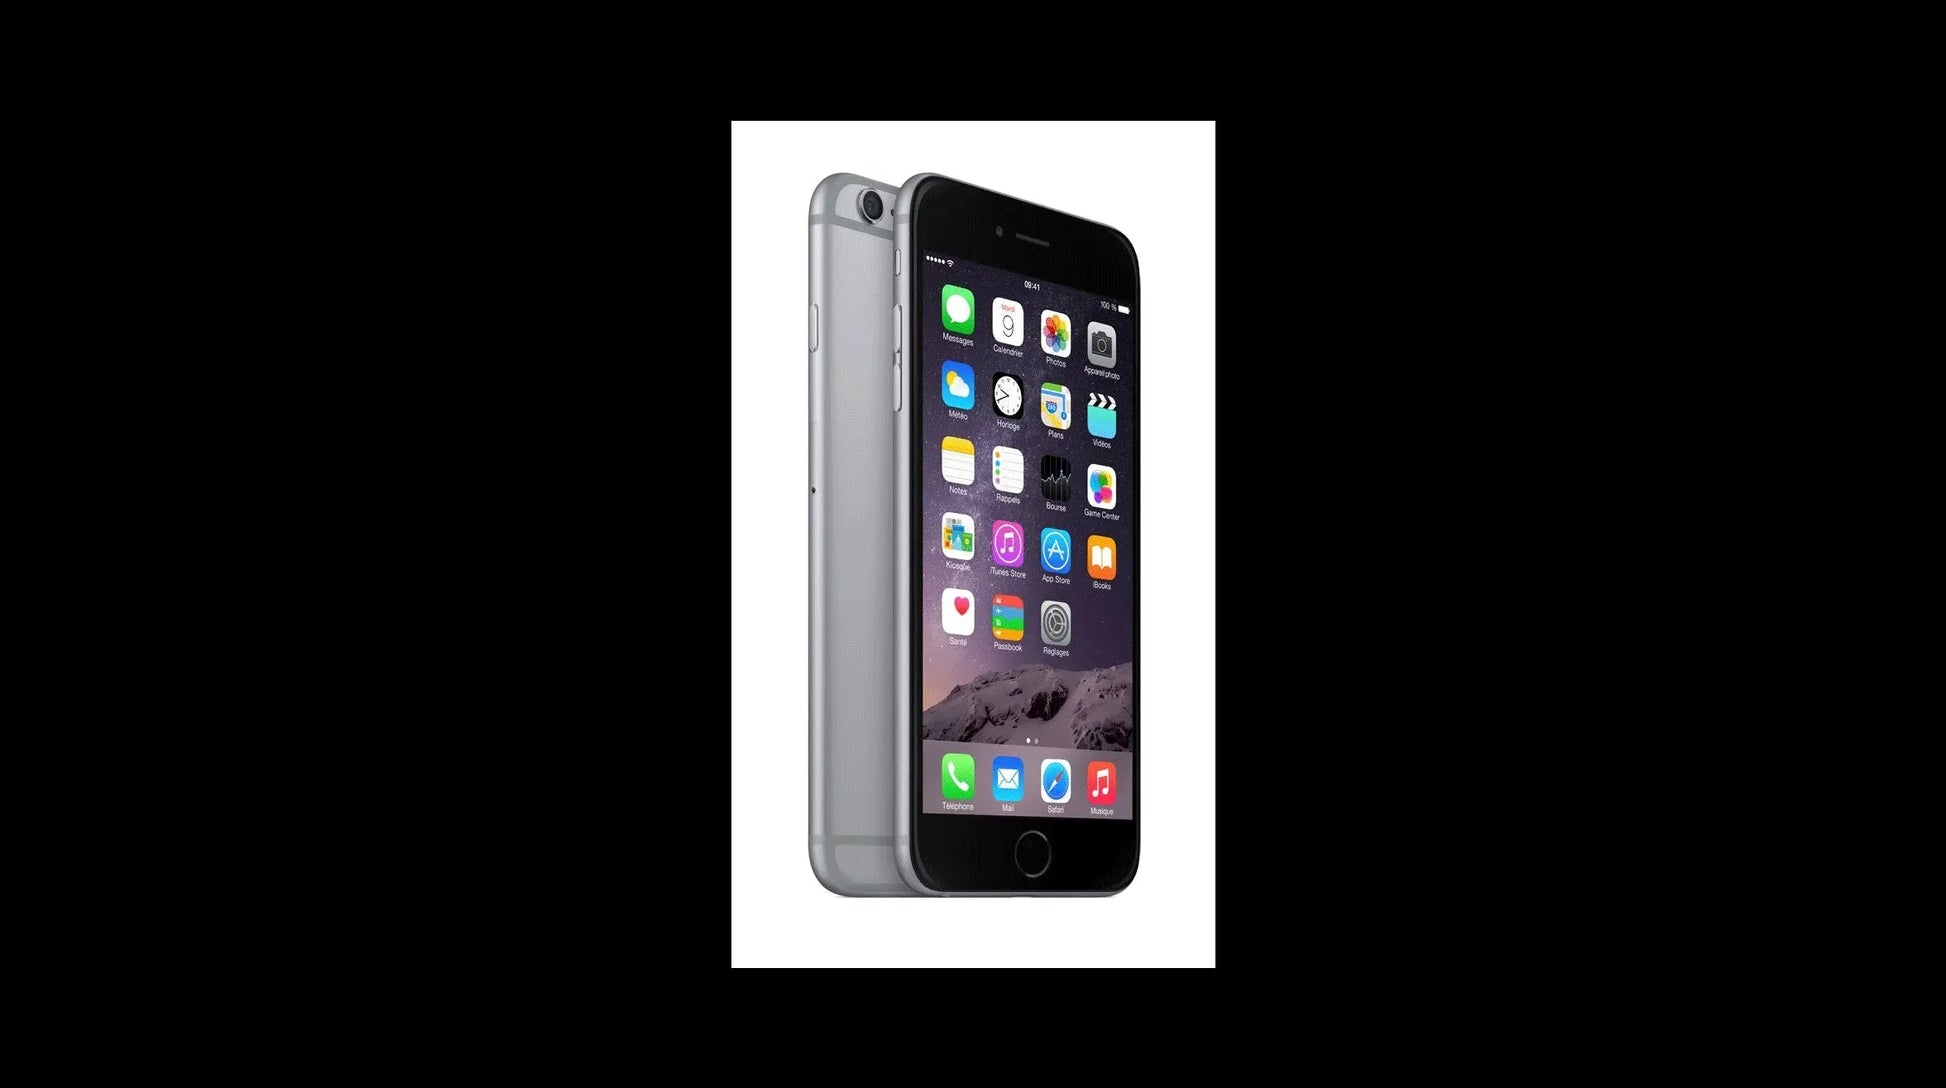 Apple iPhone 6 Plus (gris sideral ) - 64 Go Apple Computer, Inc